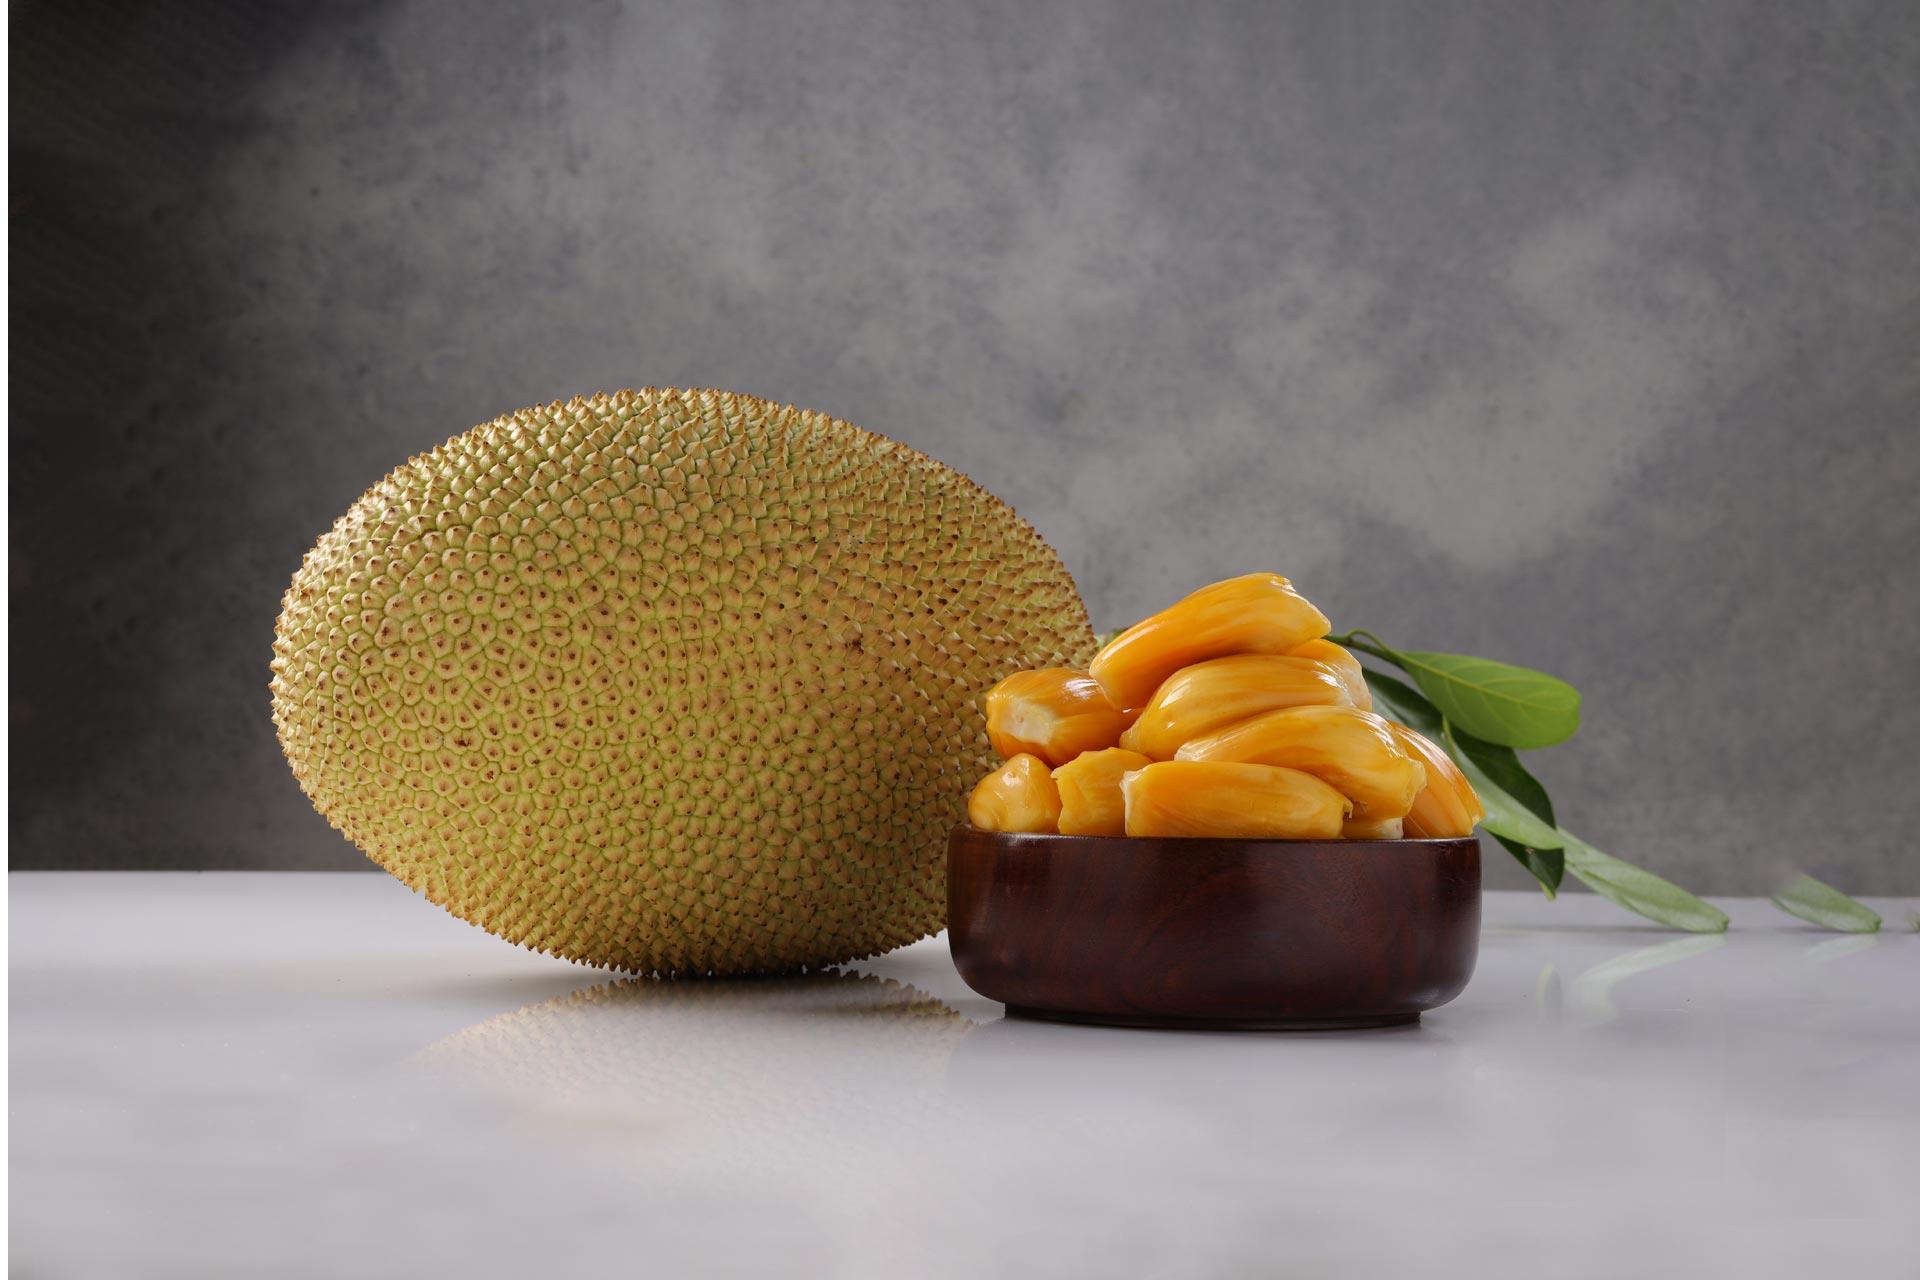 Jackfruit: Nutrition, Health benefits, and Preparation